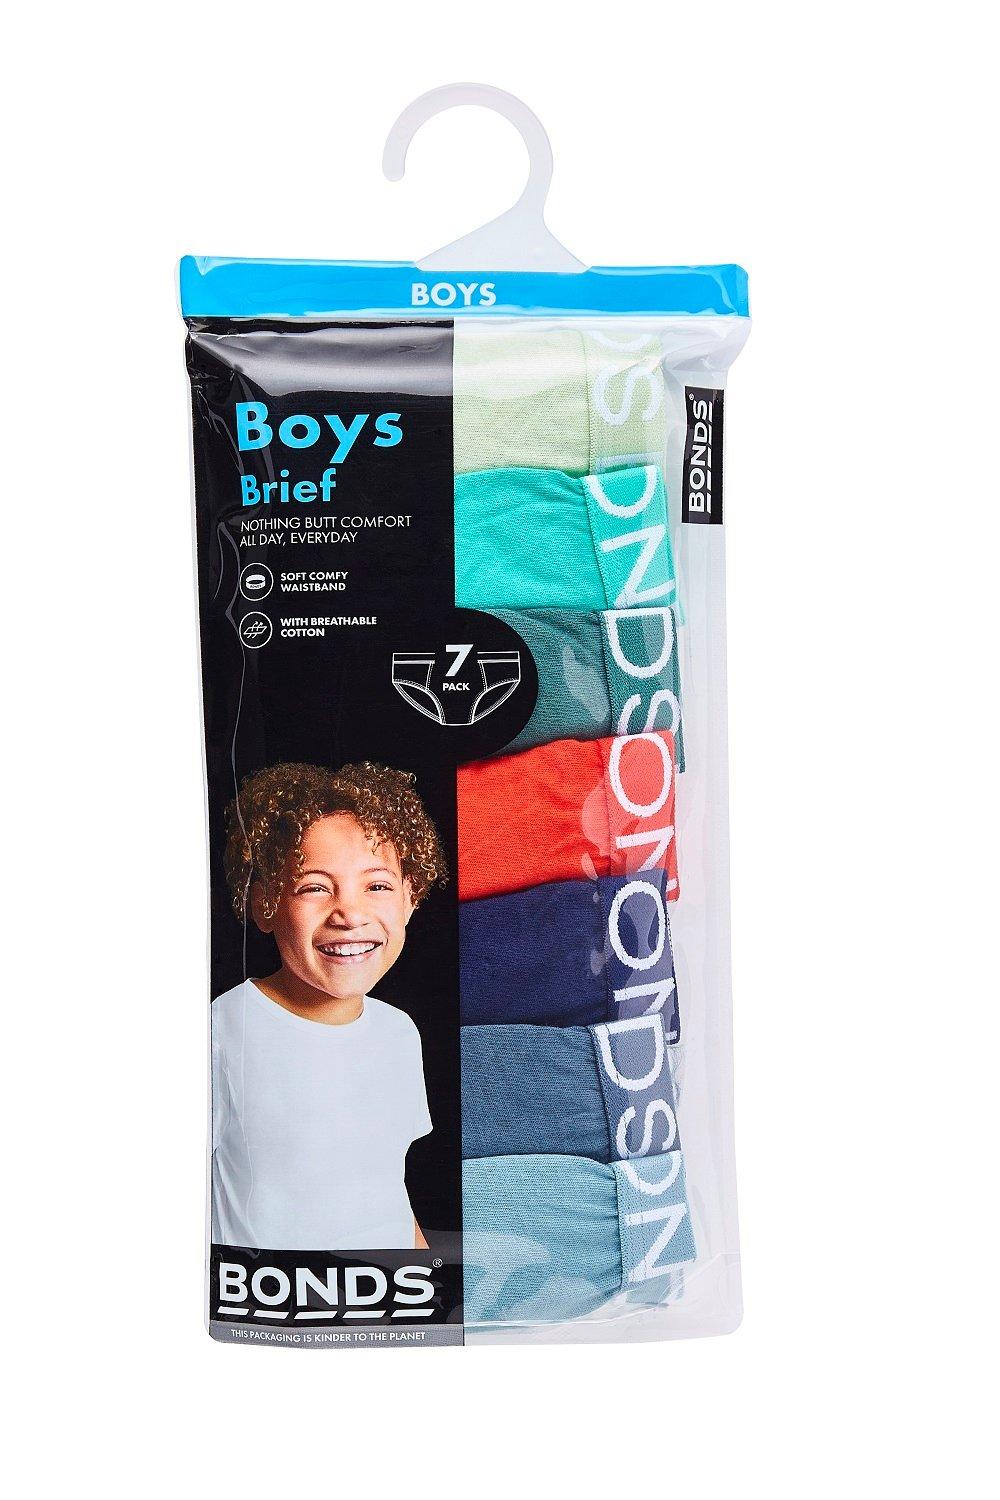 Bonds Boys Briefs - 7 Pack